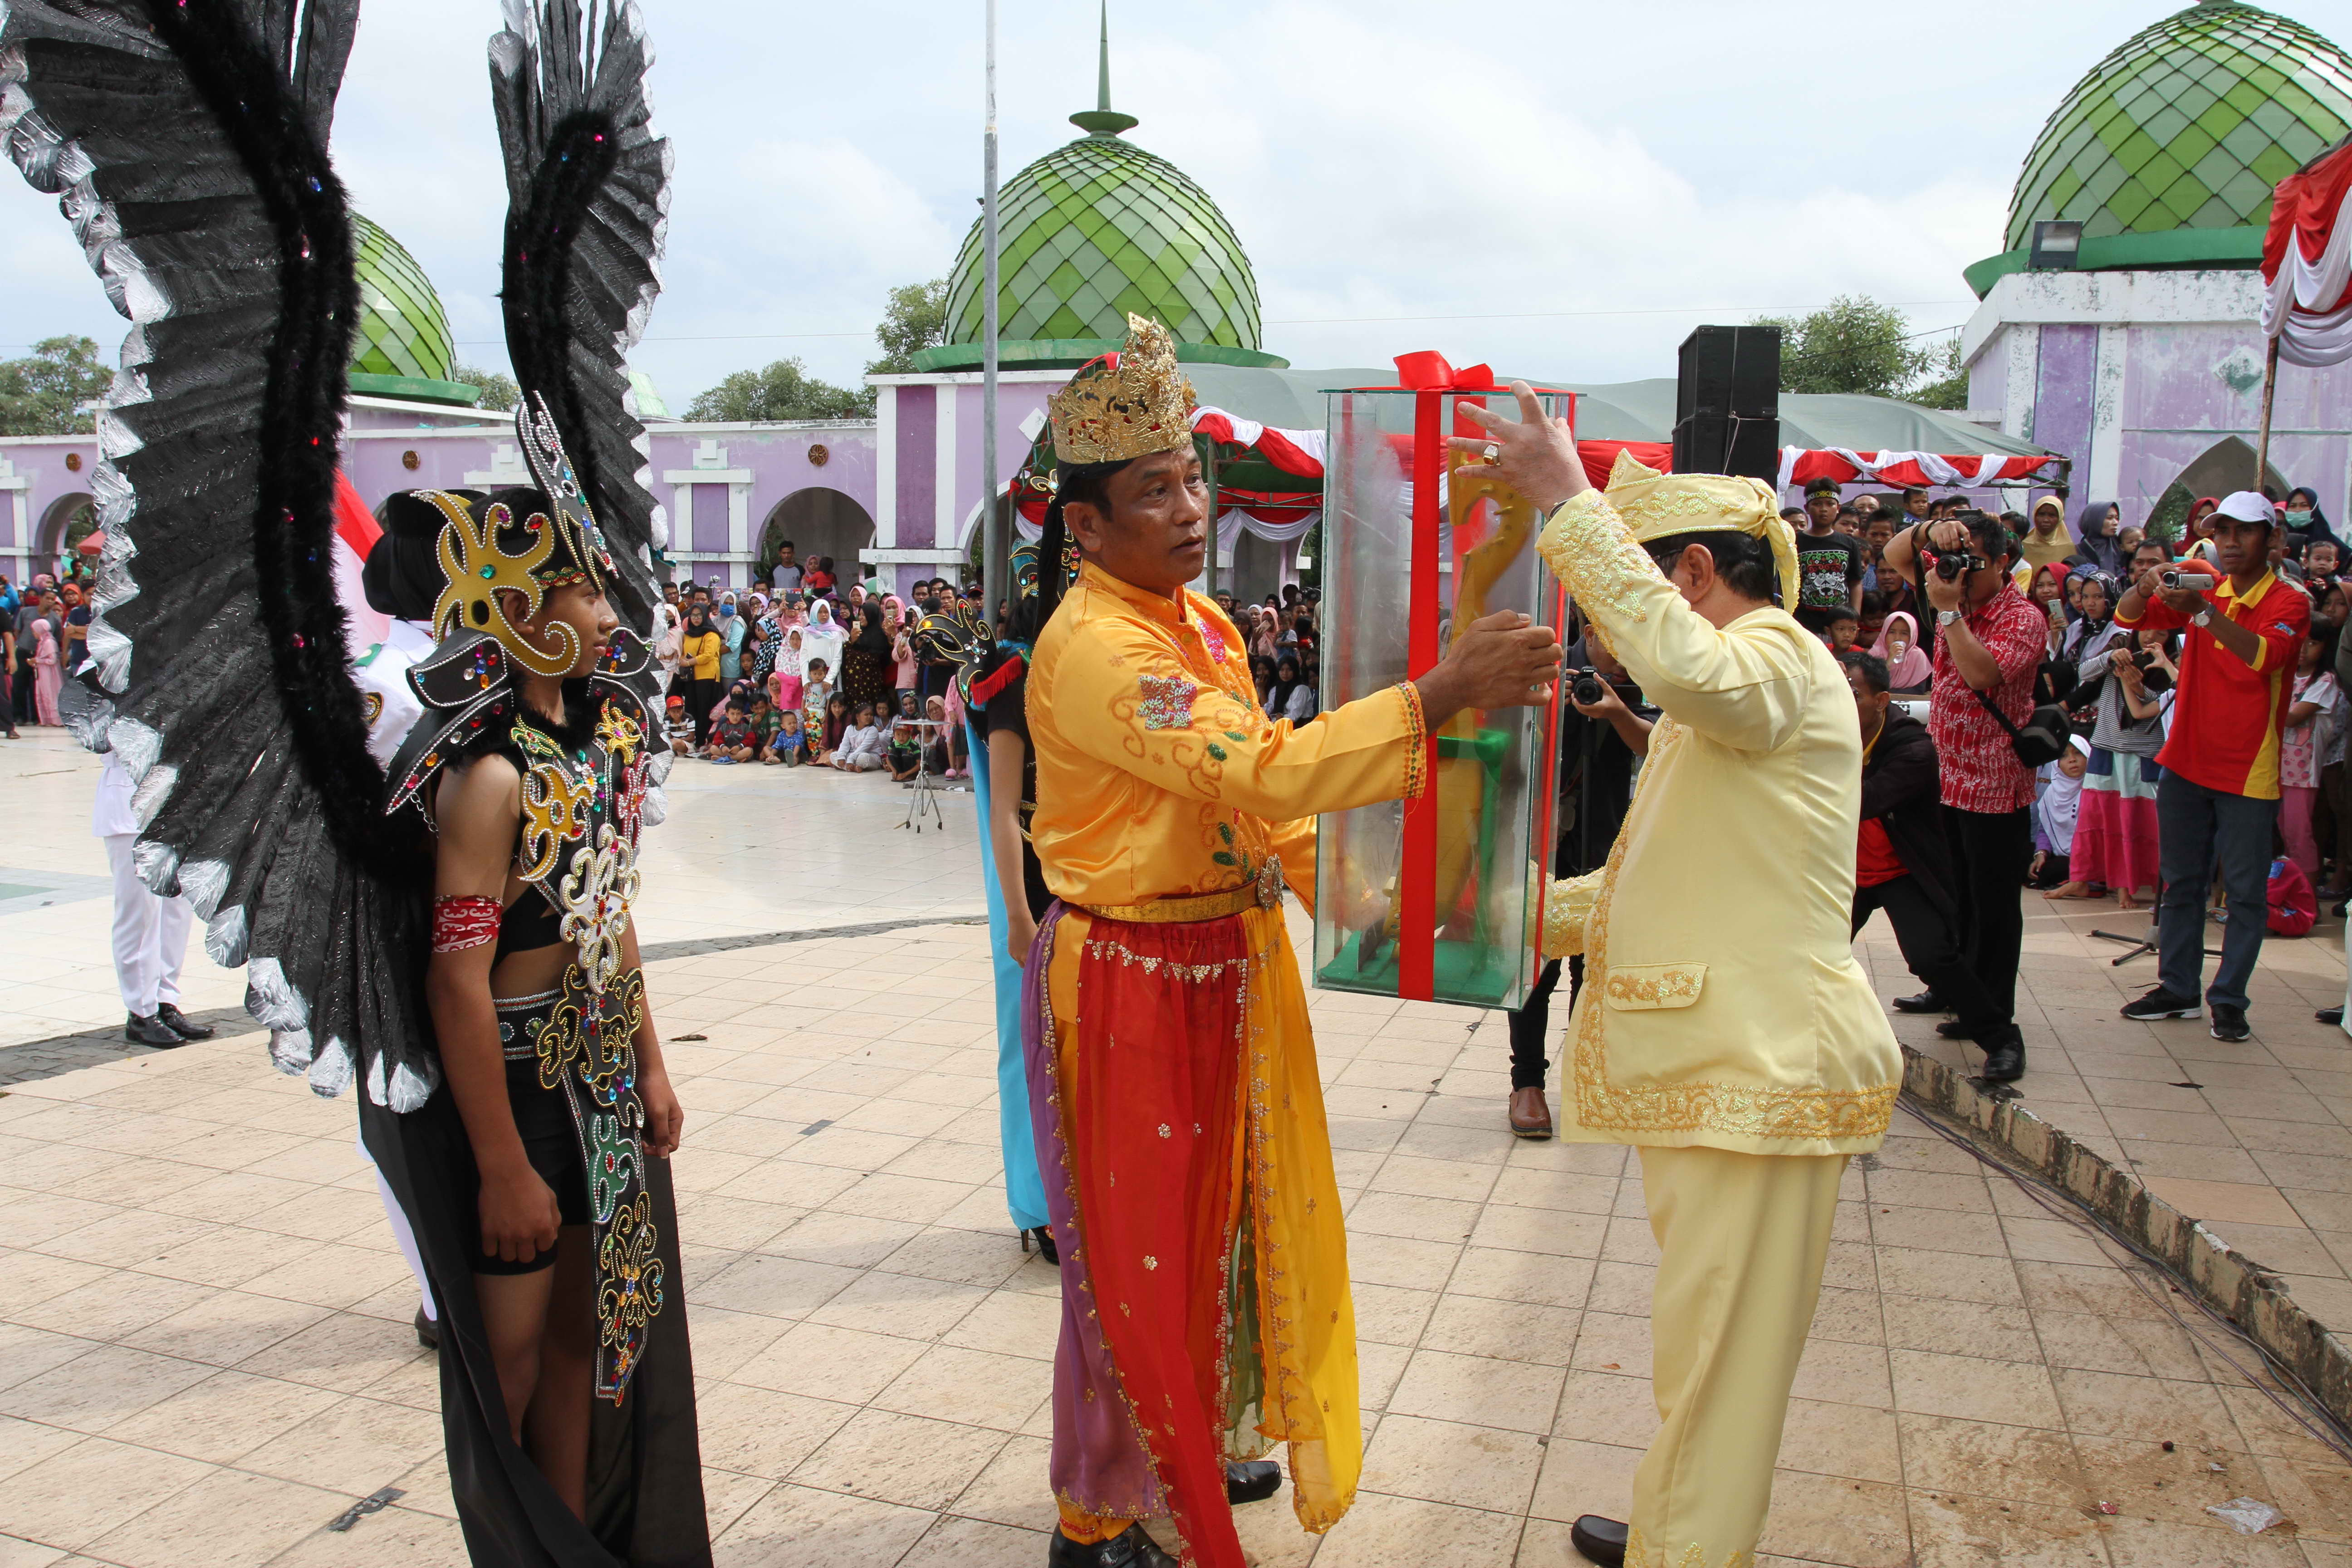 Bupati: Melalui Parade Budaya Dapat Membangun Kebersamaan